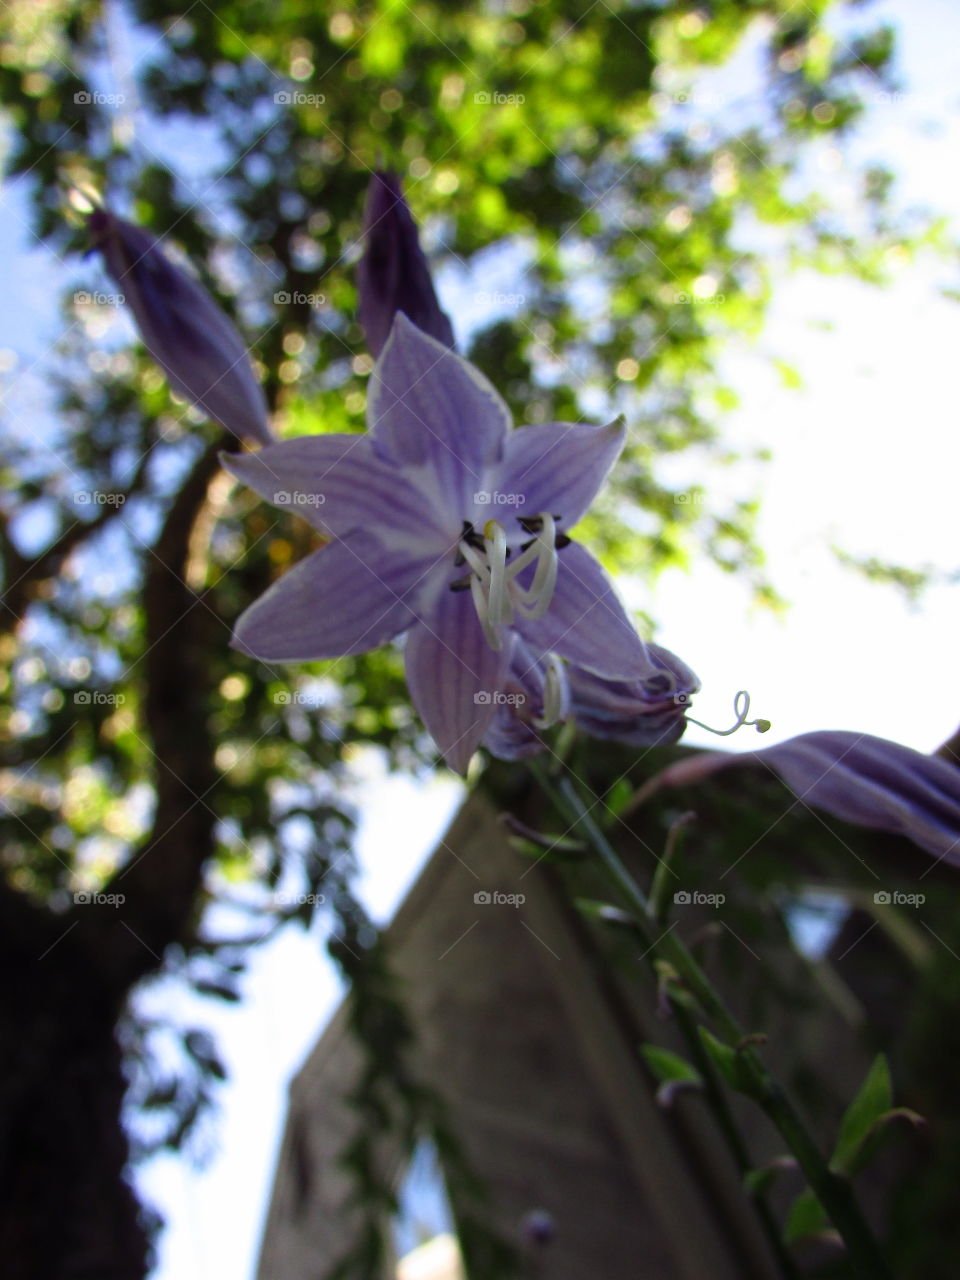 Focus on a purple flower under a tree